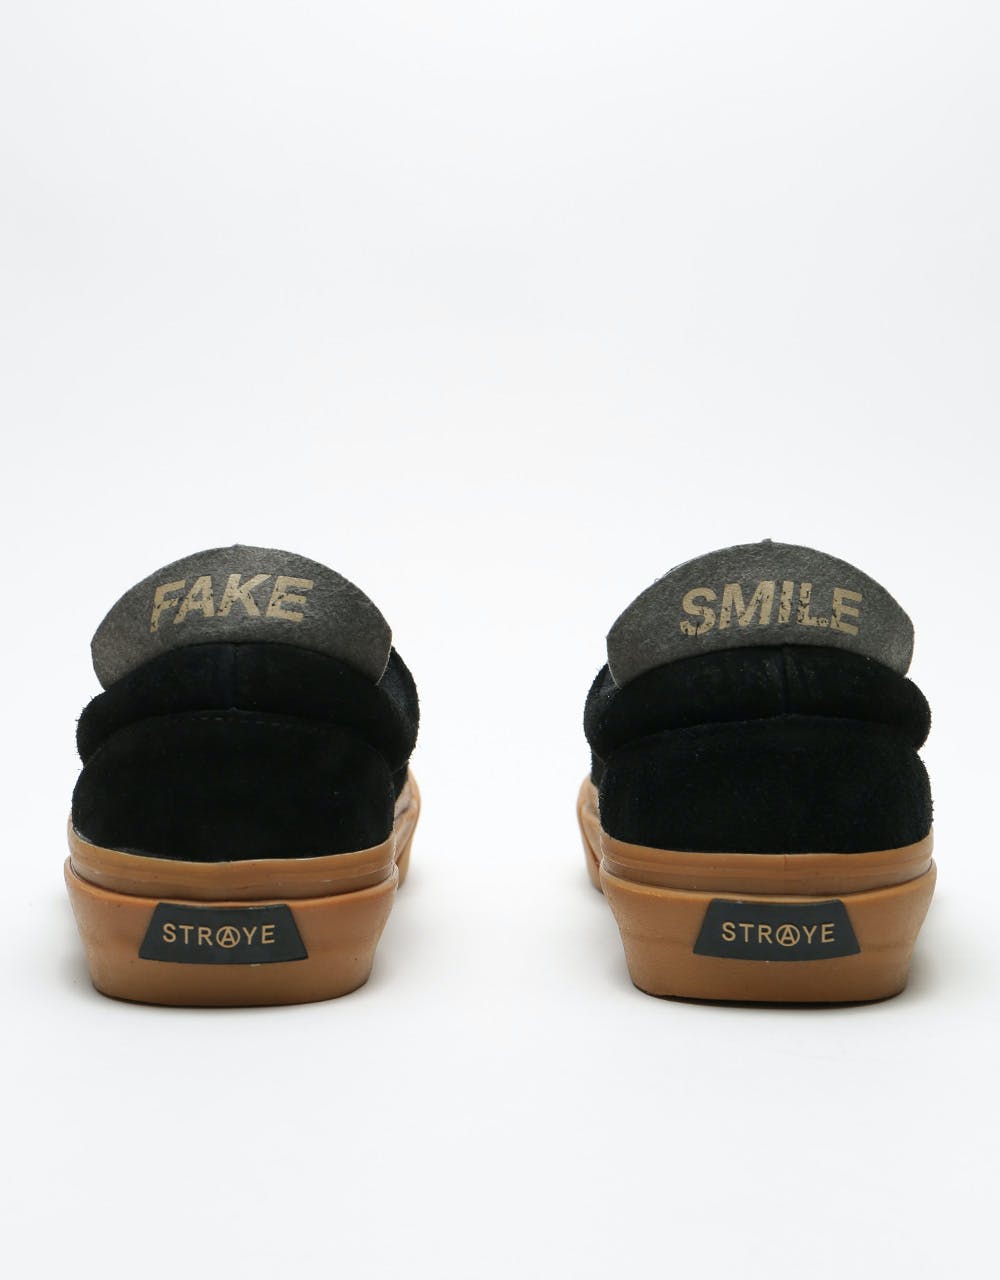 Straye Fairfax Skate Shoes - Fake Smile Suede